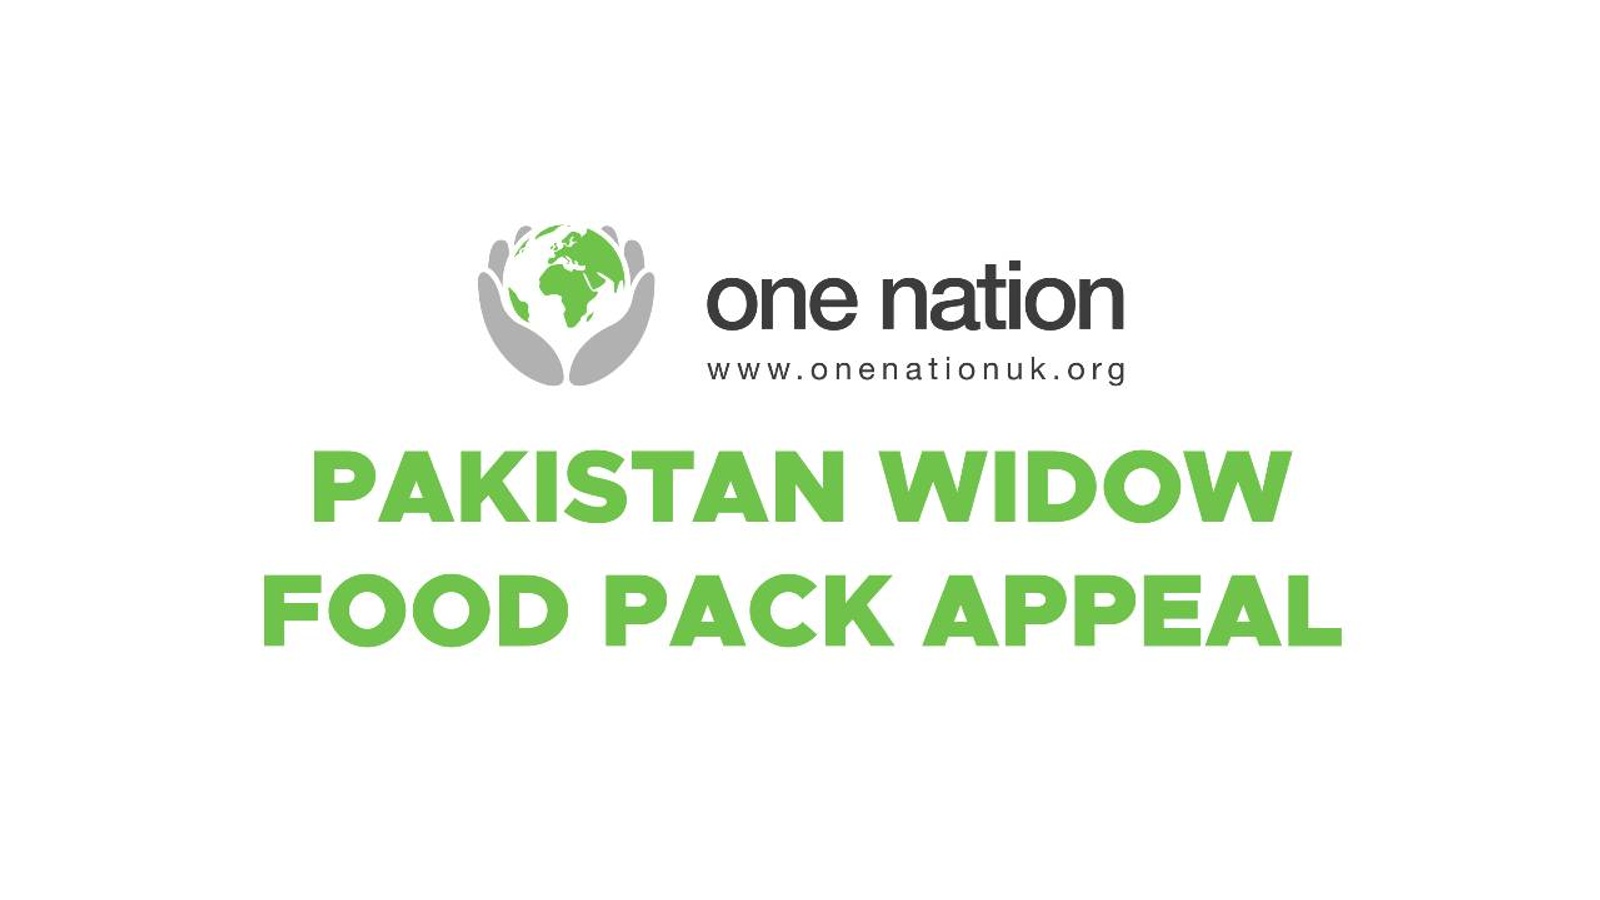 Pakistan Widows Food Pack Appeal